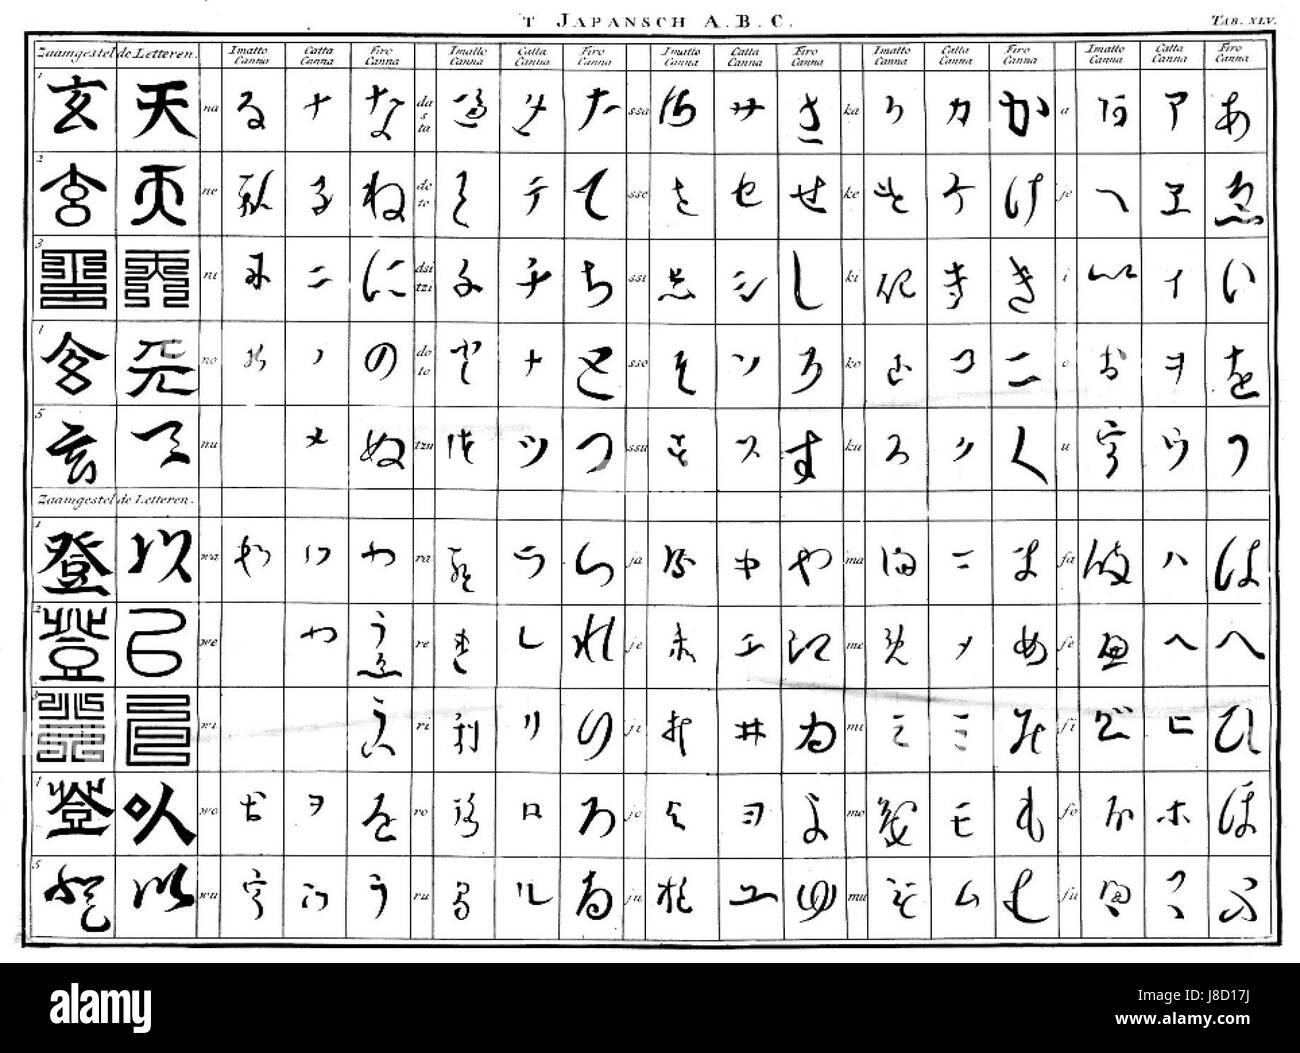 Japanese alphabet by Engelbert Kaempfer 1690 1693 Stock Photo